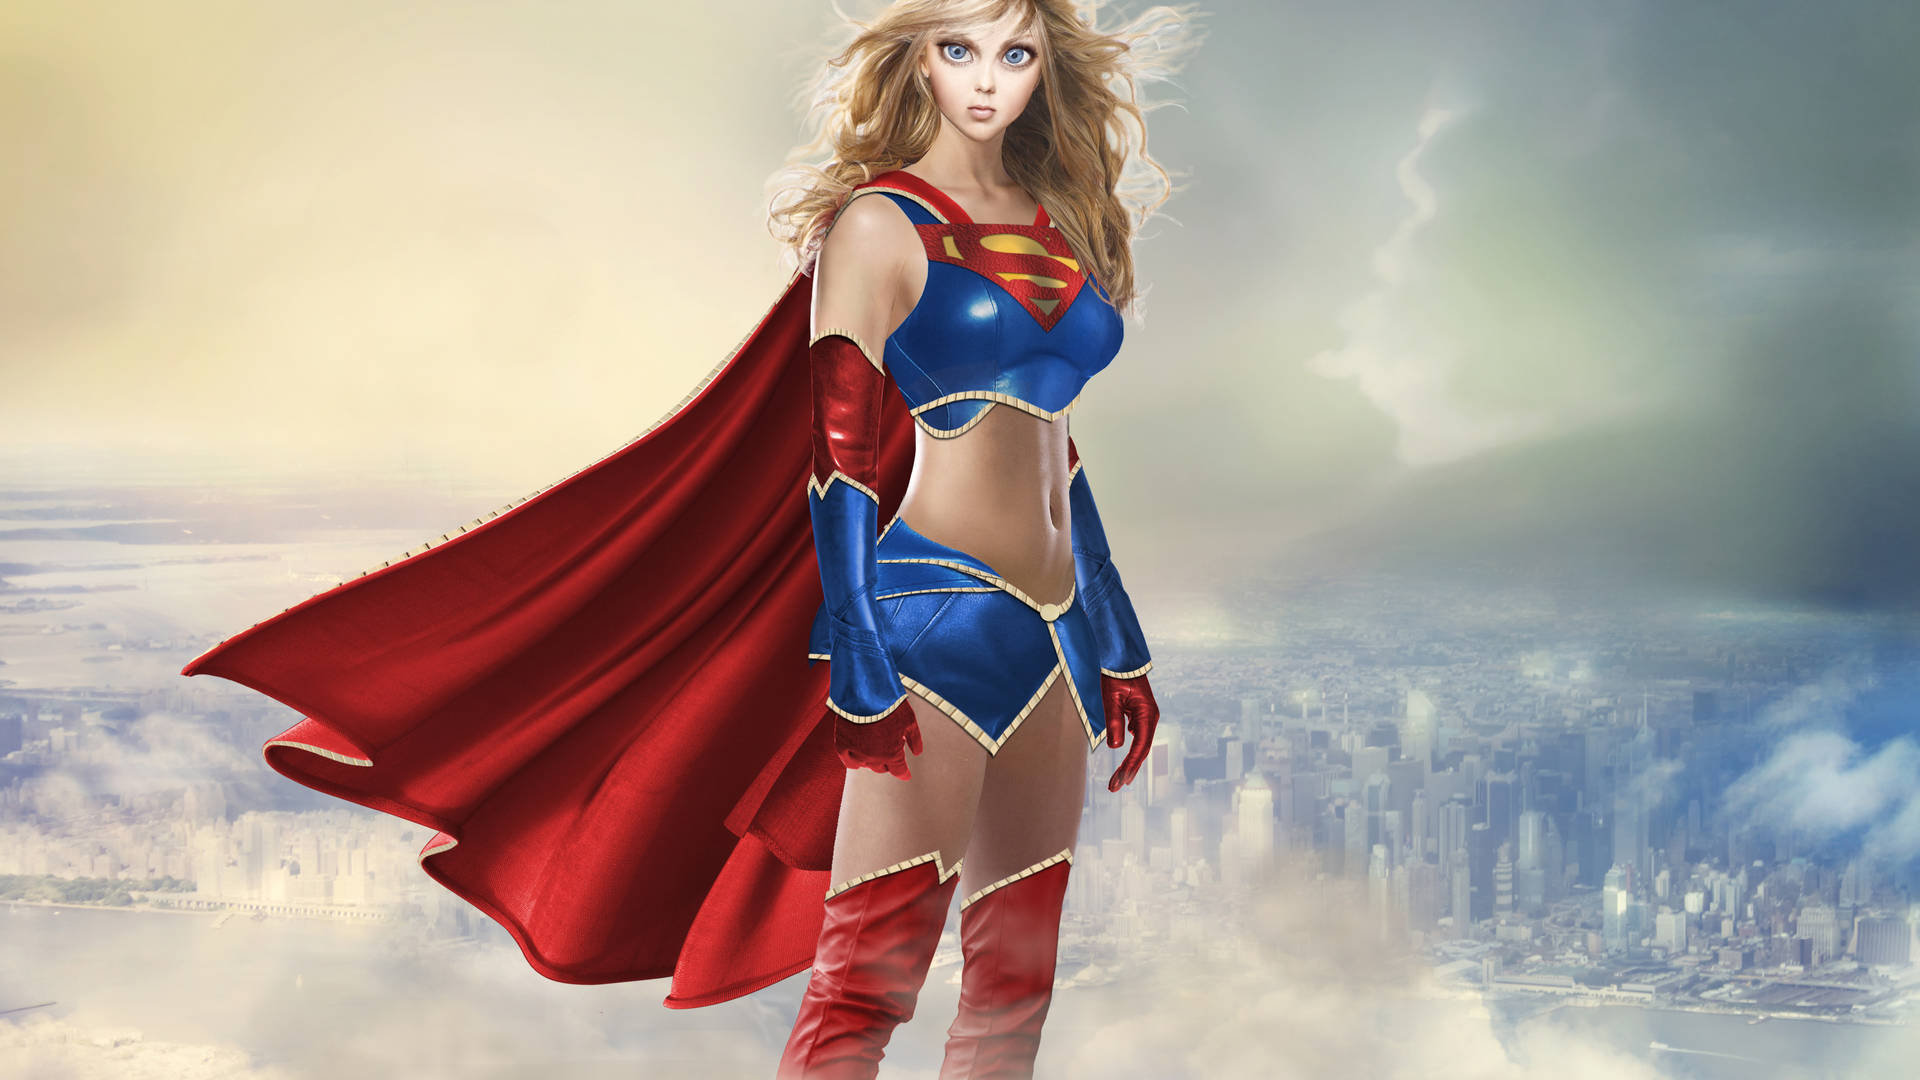 Supergirl In Misty City Background